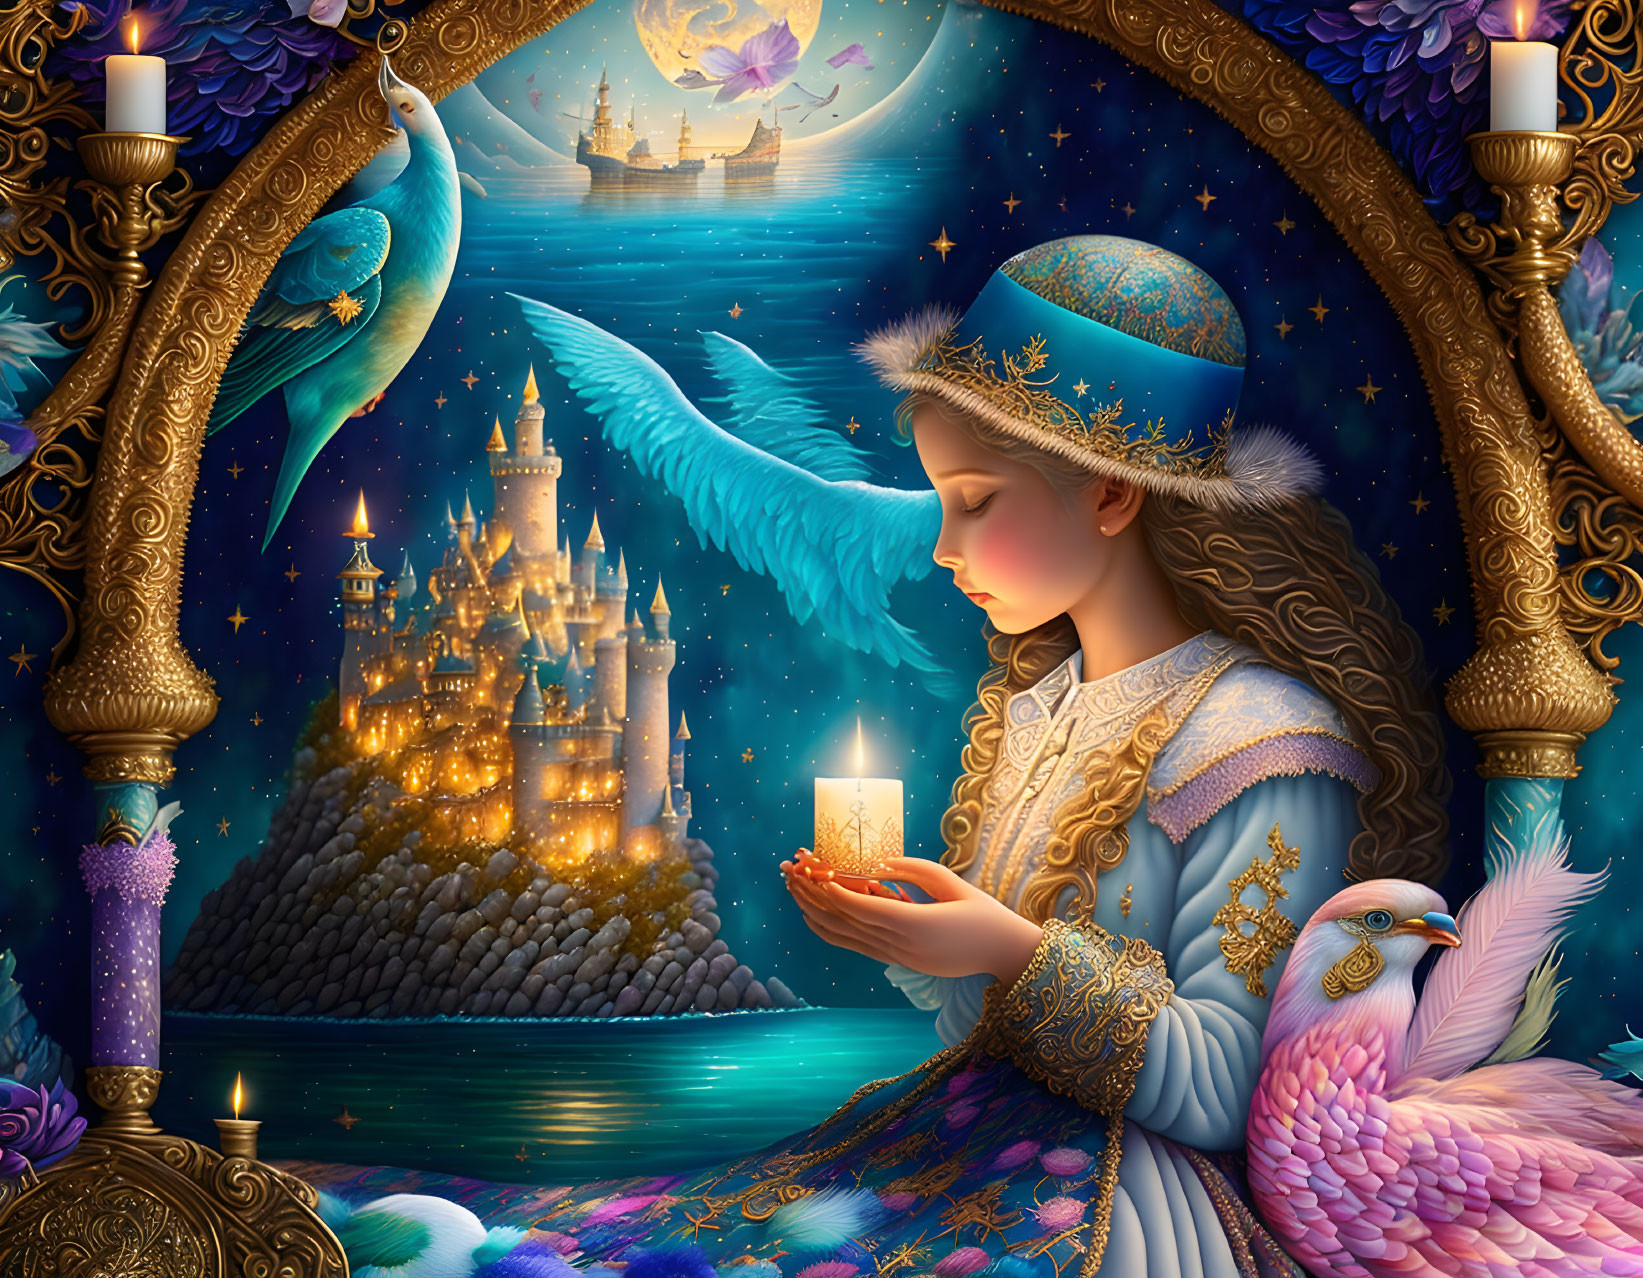 Imagining a fairy tale